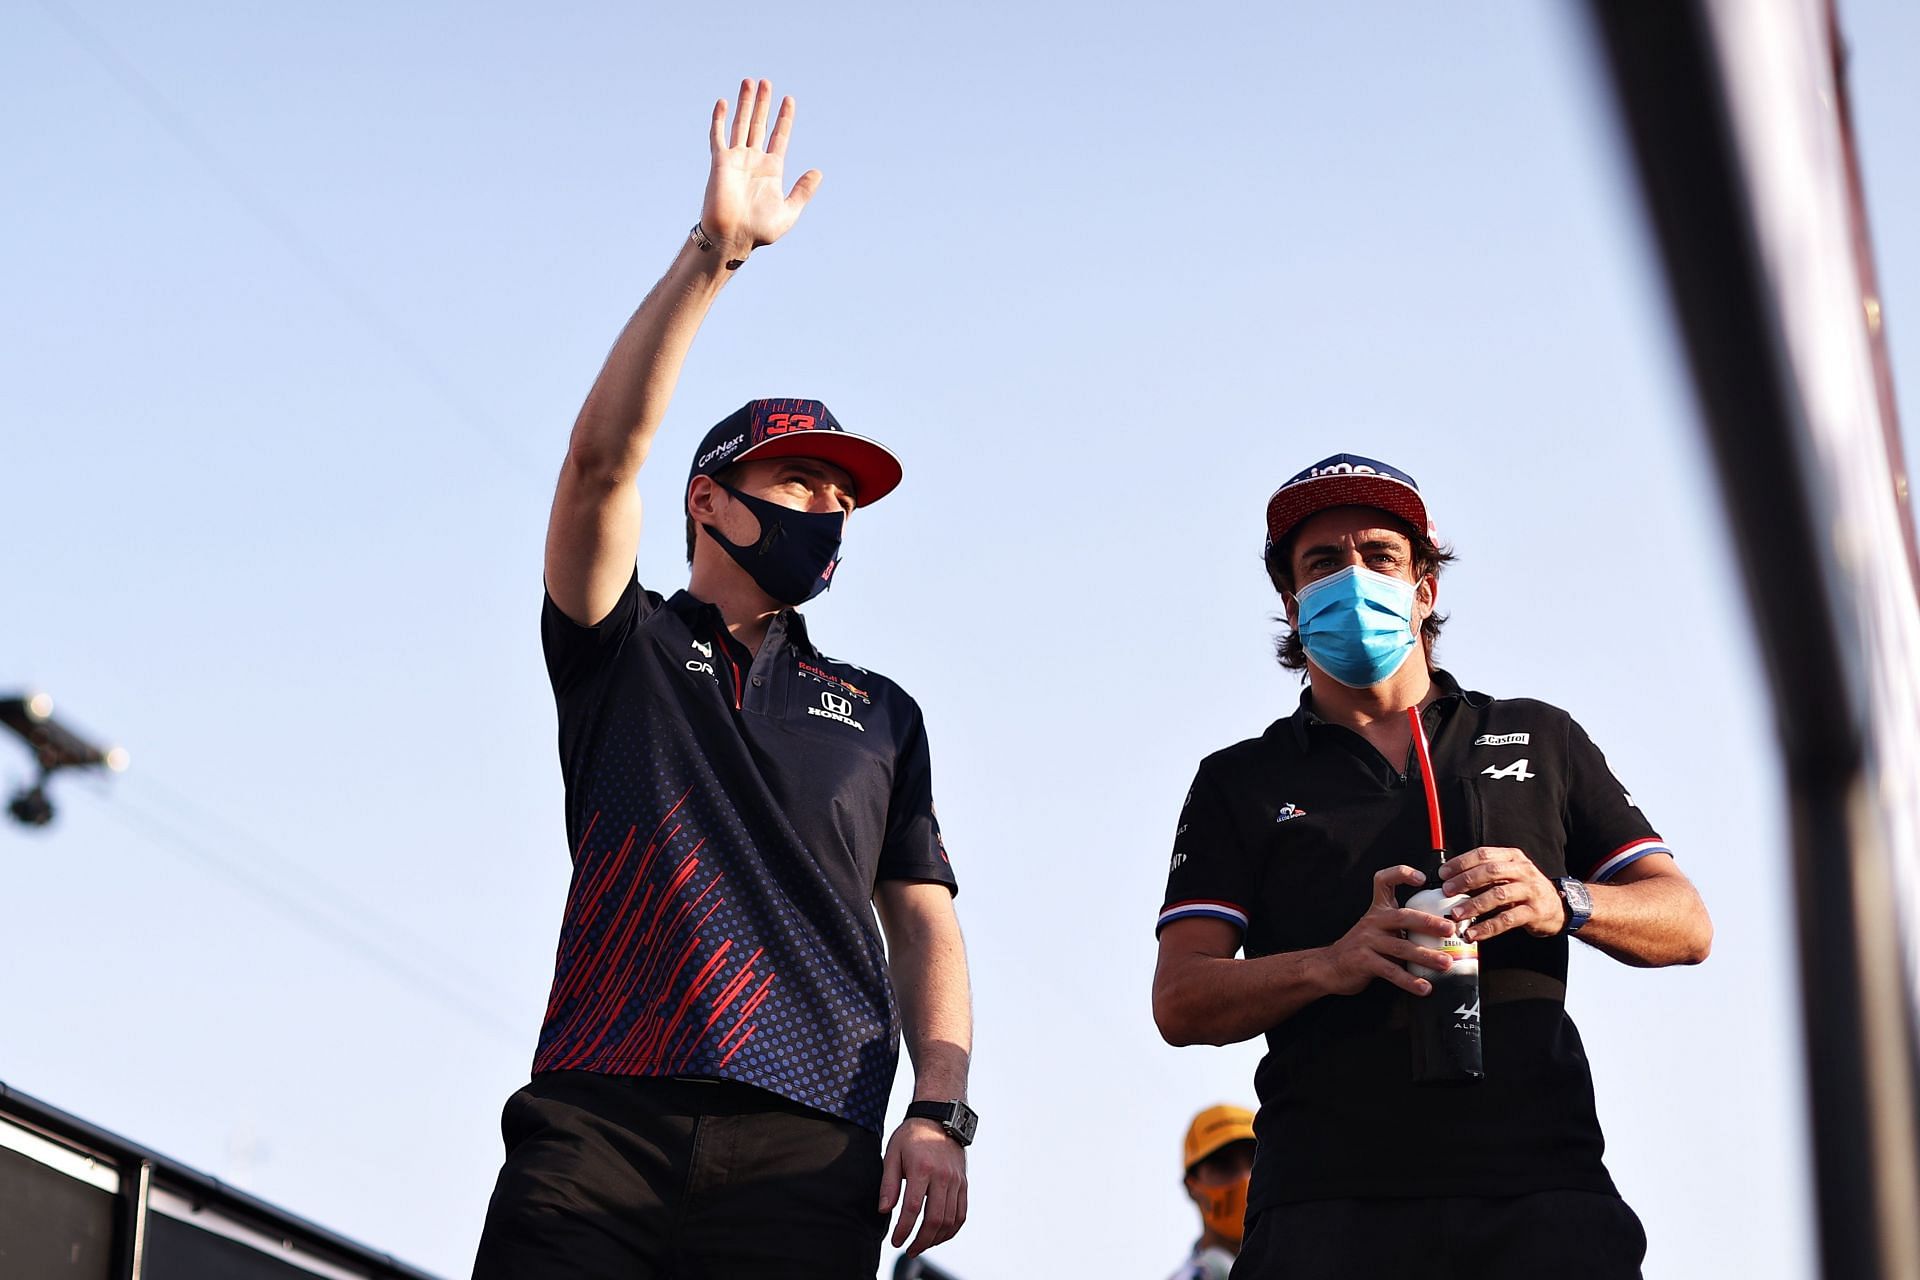 F1 Grand Prix of Qatar - Max Verstappen and Fernando Alonso arrive in Qatar